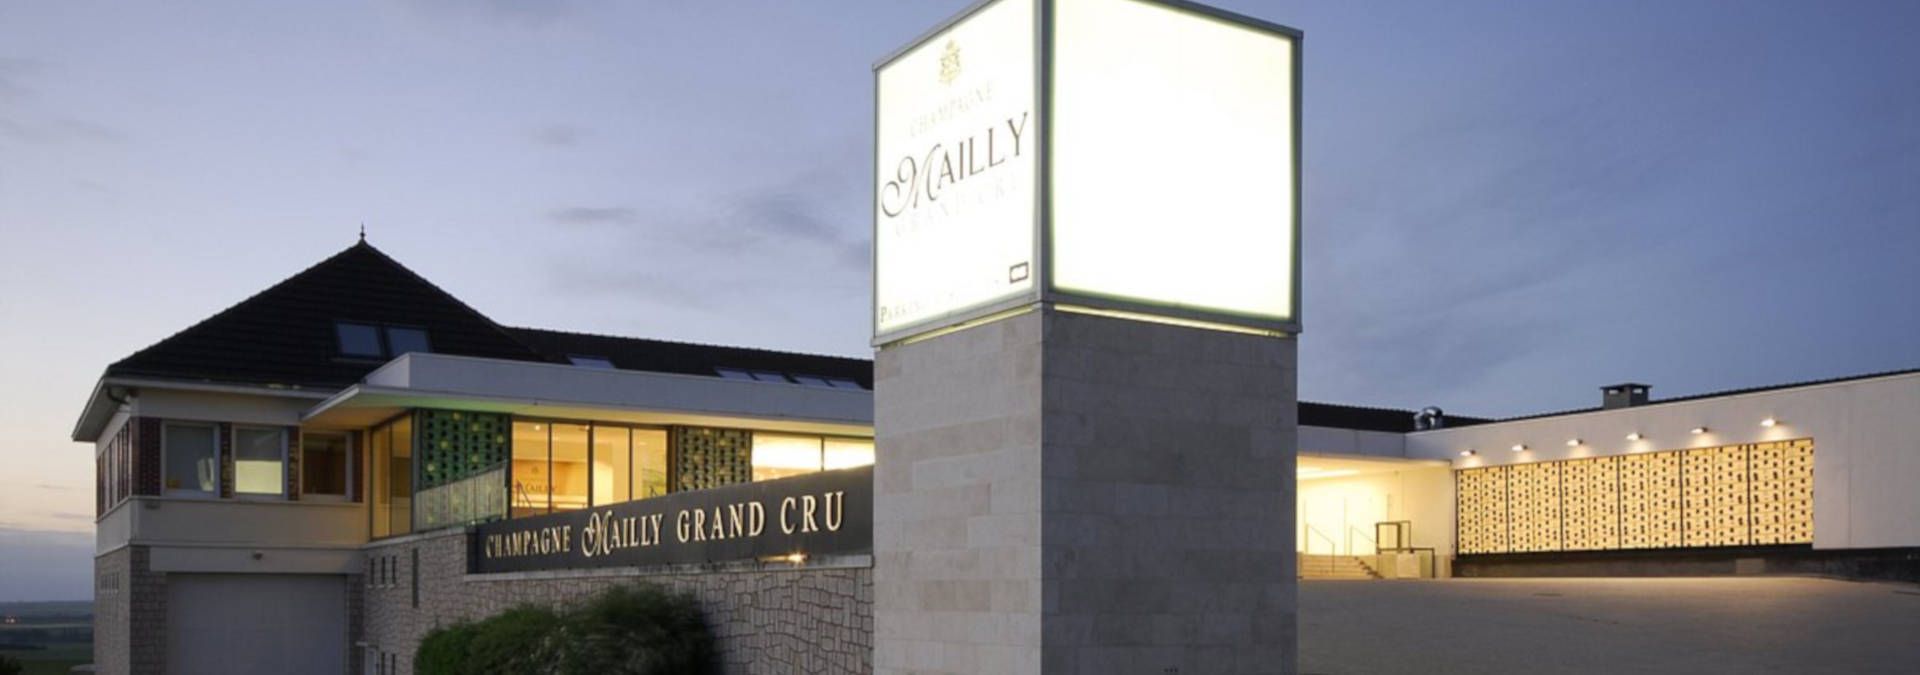 Champagne Mailly Grand Cru - Rue des Vignerons